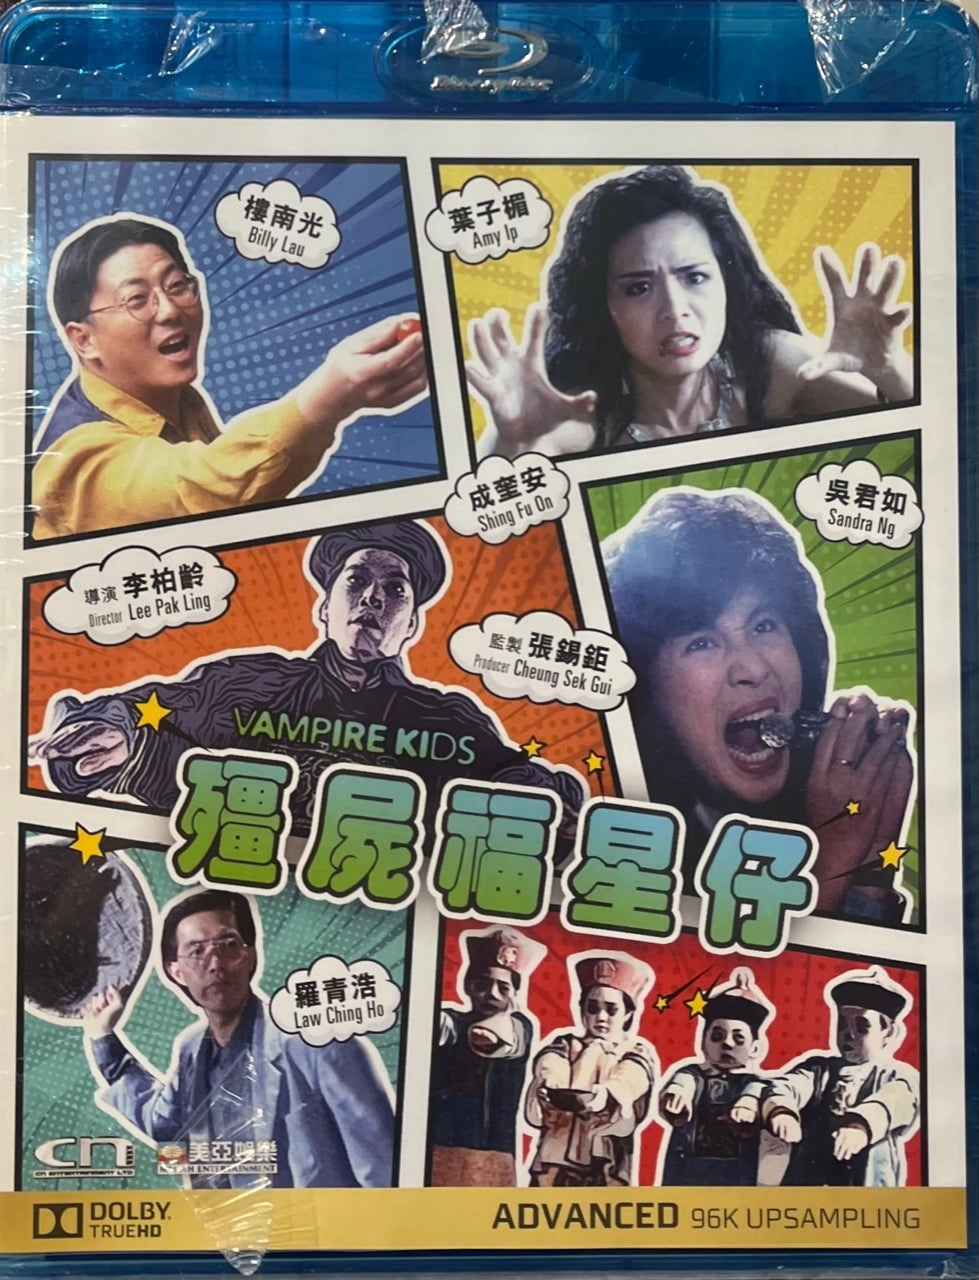 Vampire Kids 殭屍福星仔 1991 (Hong Kong Movie) BLU-RAY with English Sub (Region Free)